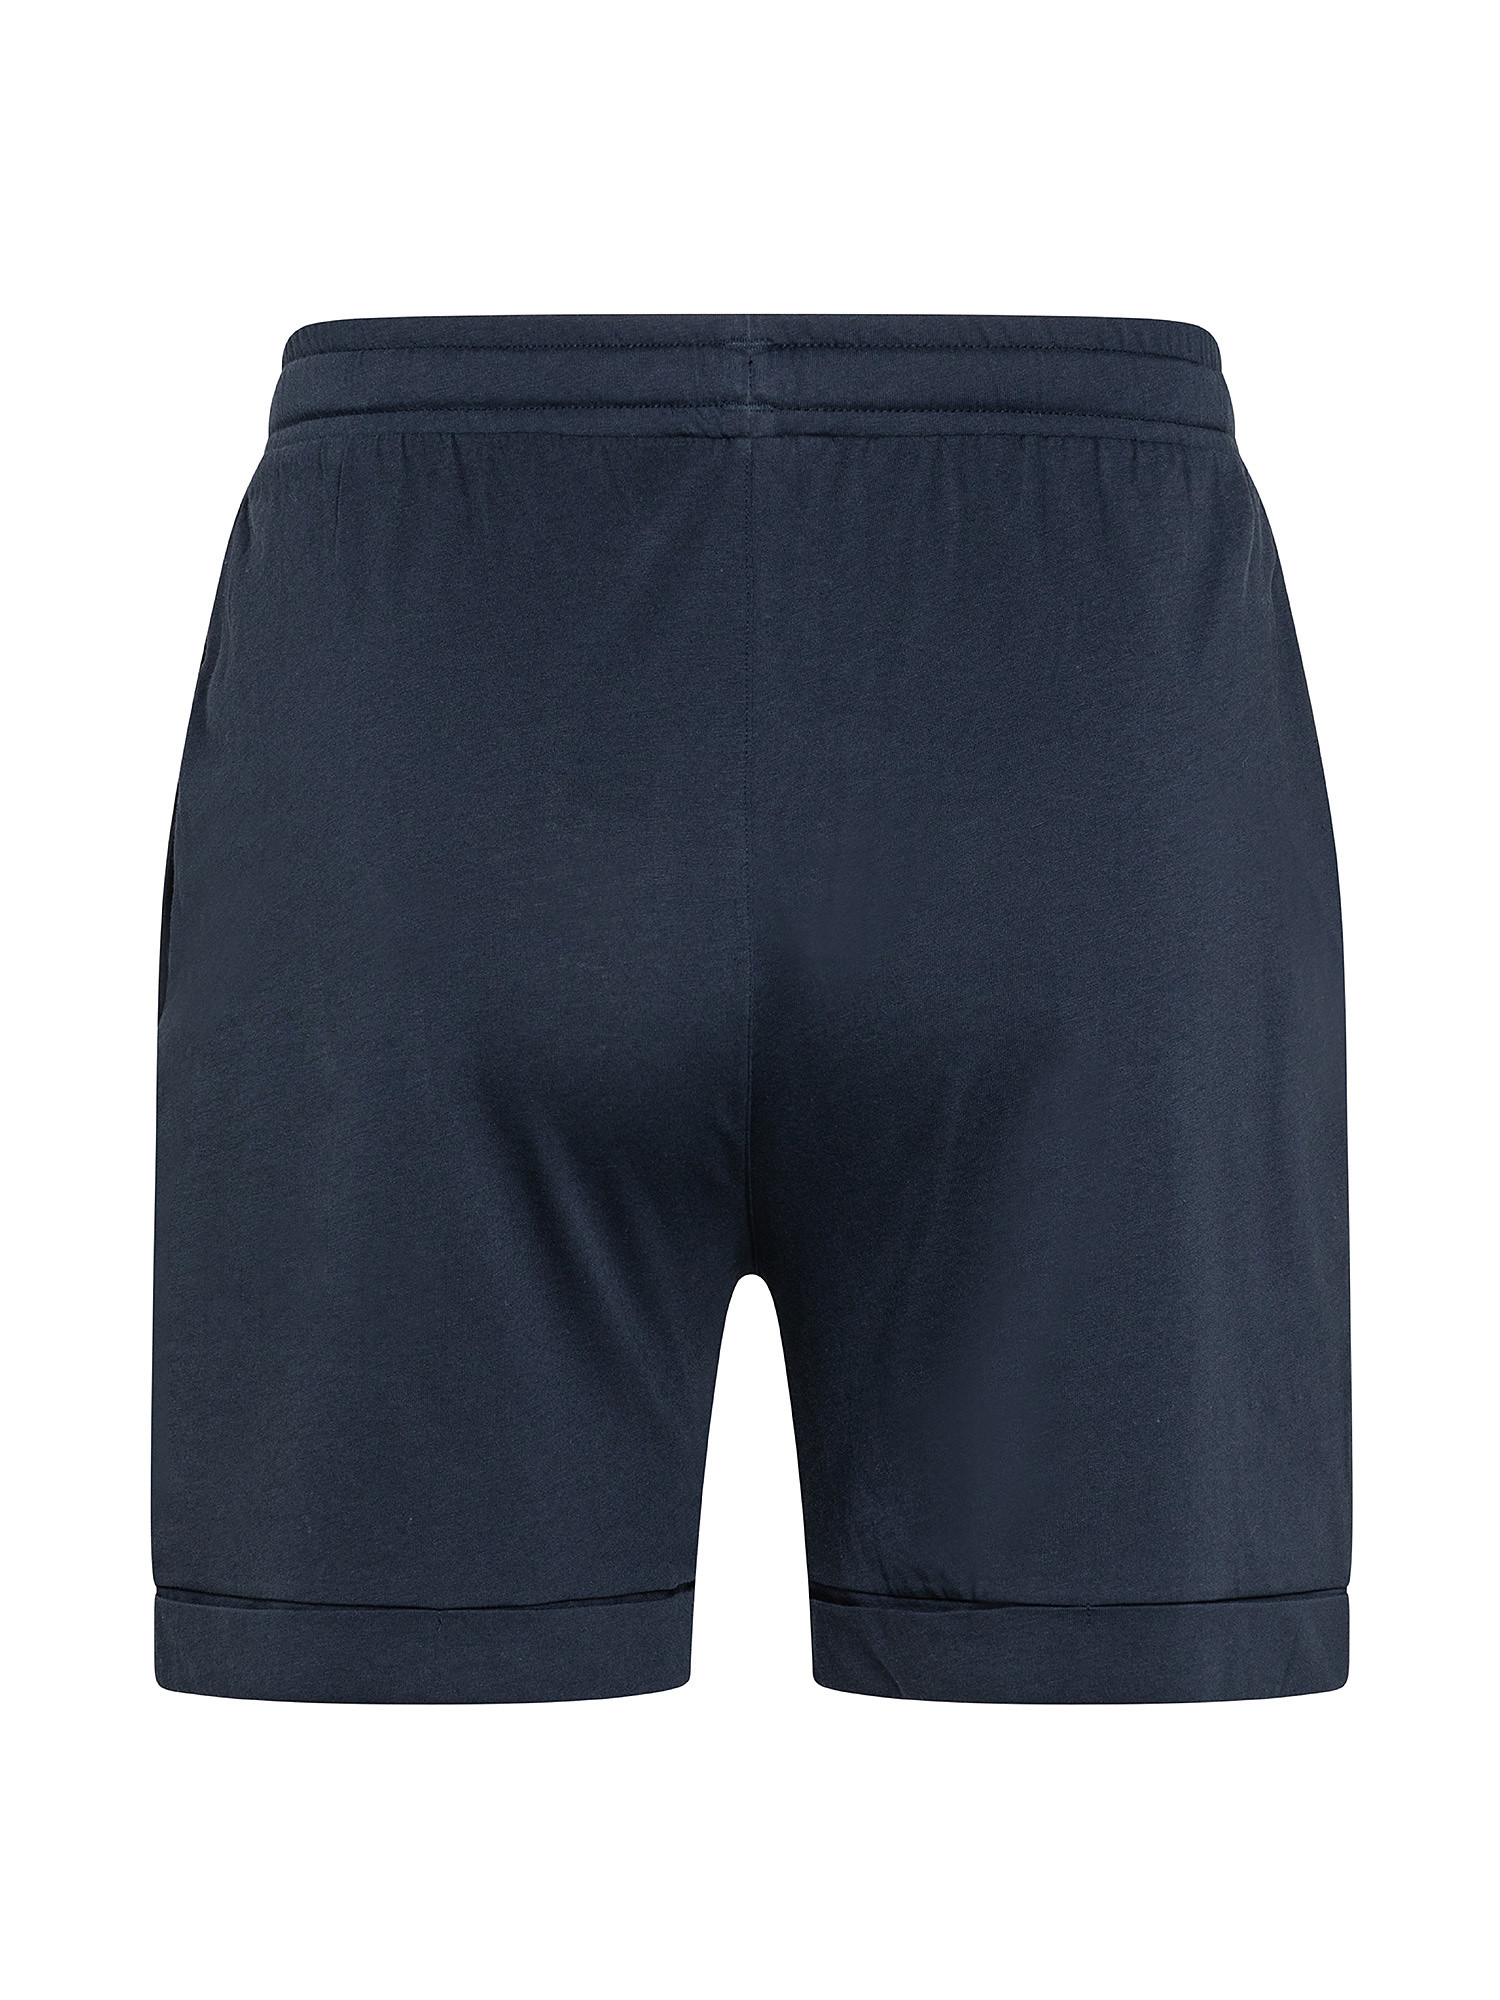 Shorts con logo, Blu, large image number 1